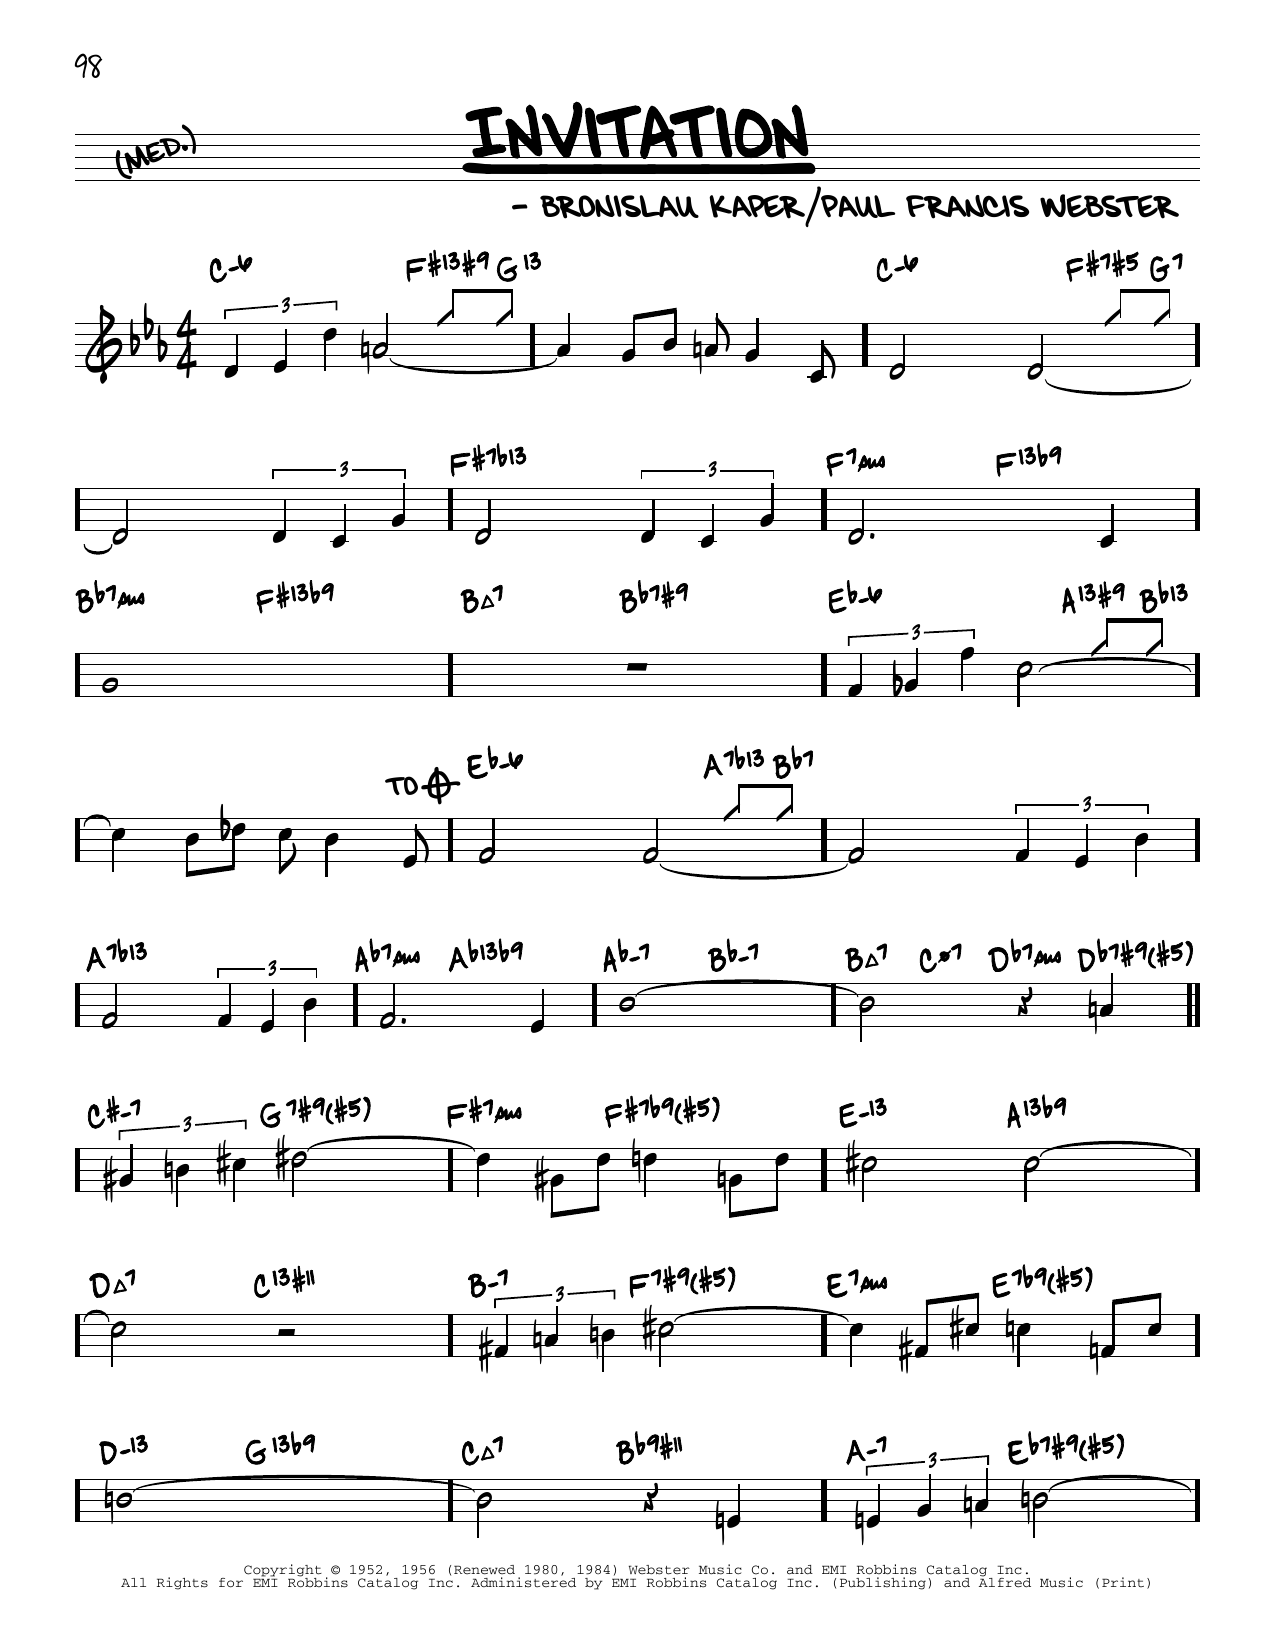 Bronislau Kaper Invitation (arr. David Hazeltine) Sheet Music Notes & Chords for Real Book – Enhanced Chords - Download or Print PDF